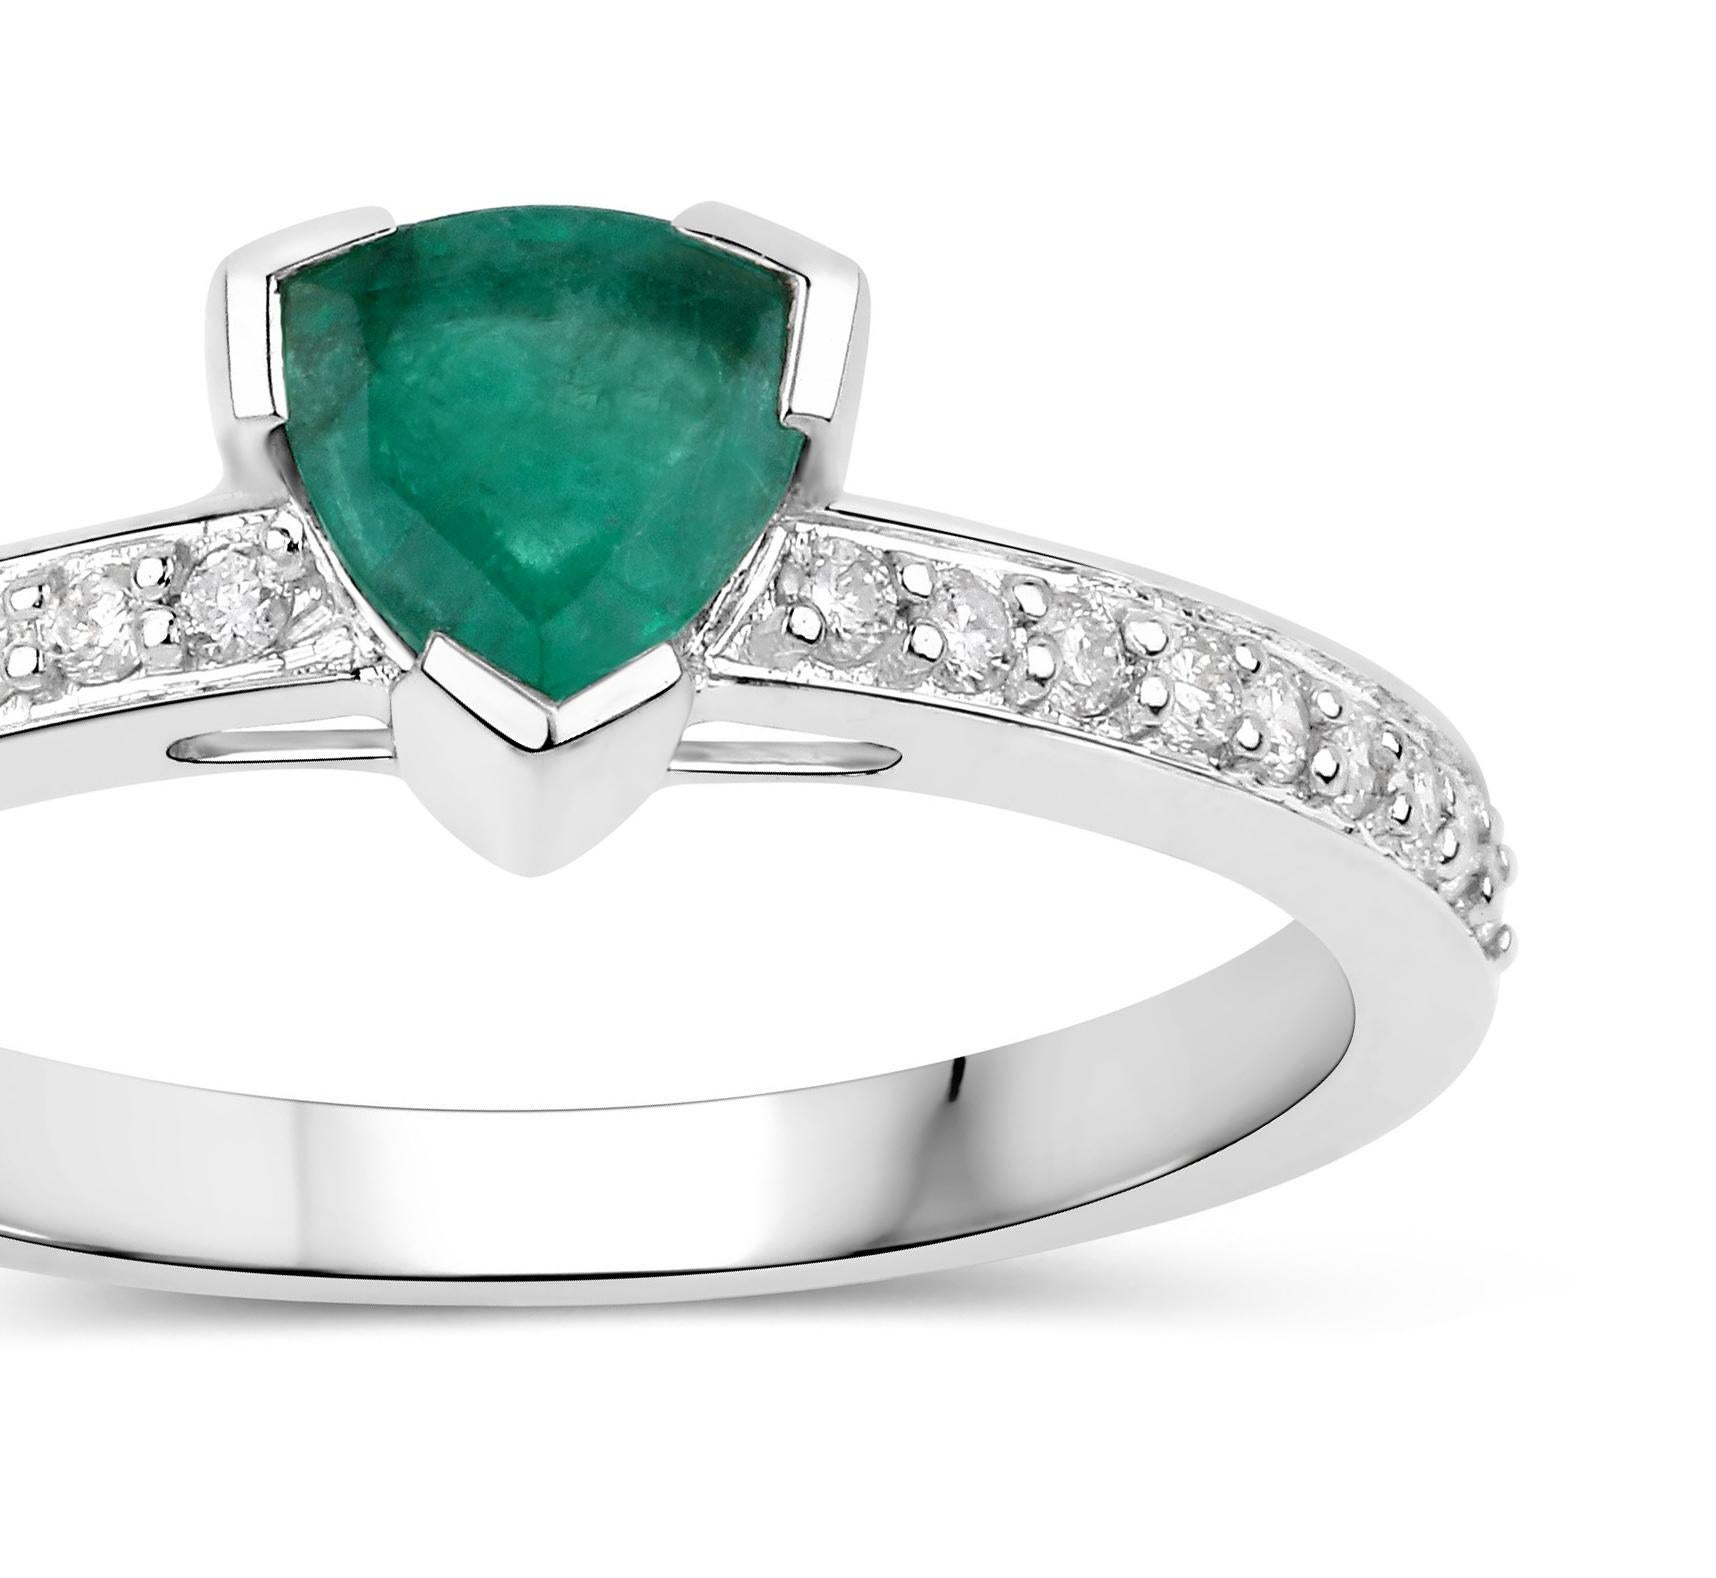 Contemporary Natural Zambian Trillion Cut Emerald Ring Diamond Setting 14K White Gold For Sale